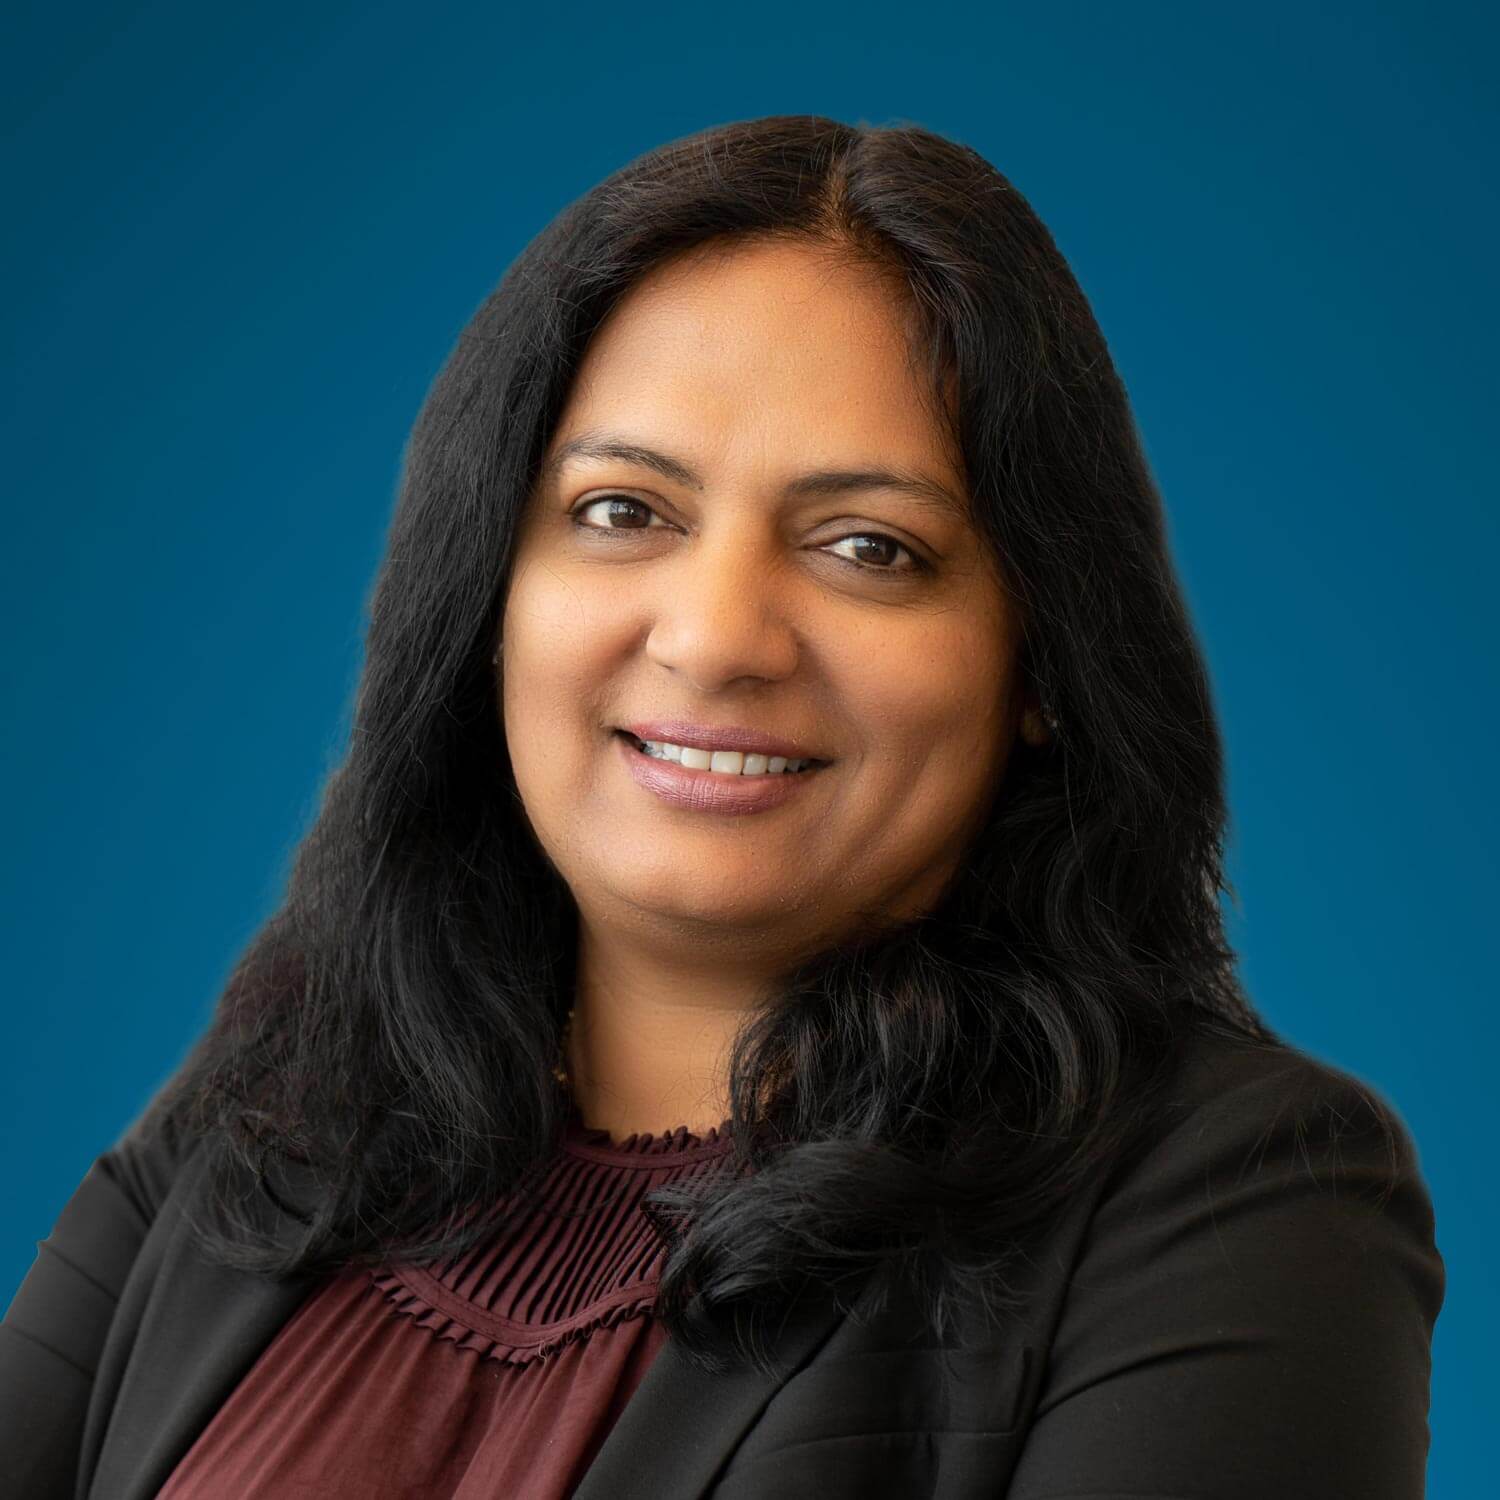 Porträt von Aparna Rayasam, Chief Product Officer bei Trellix